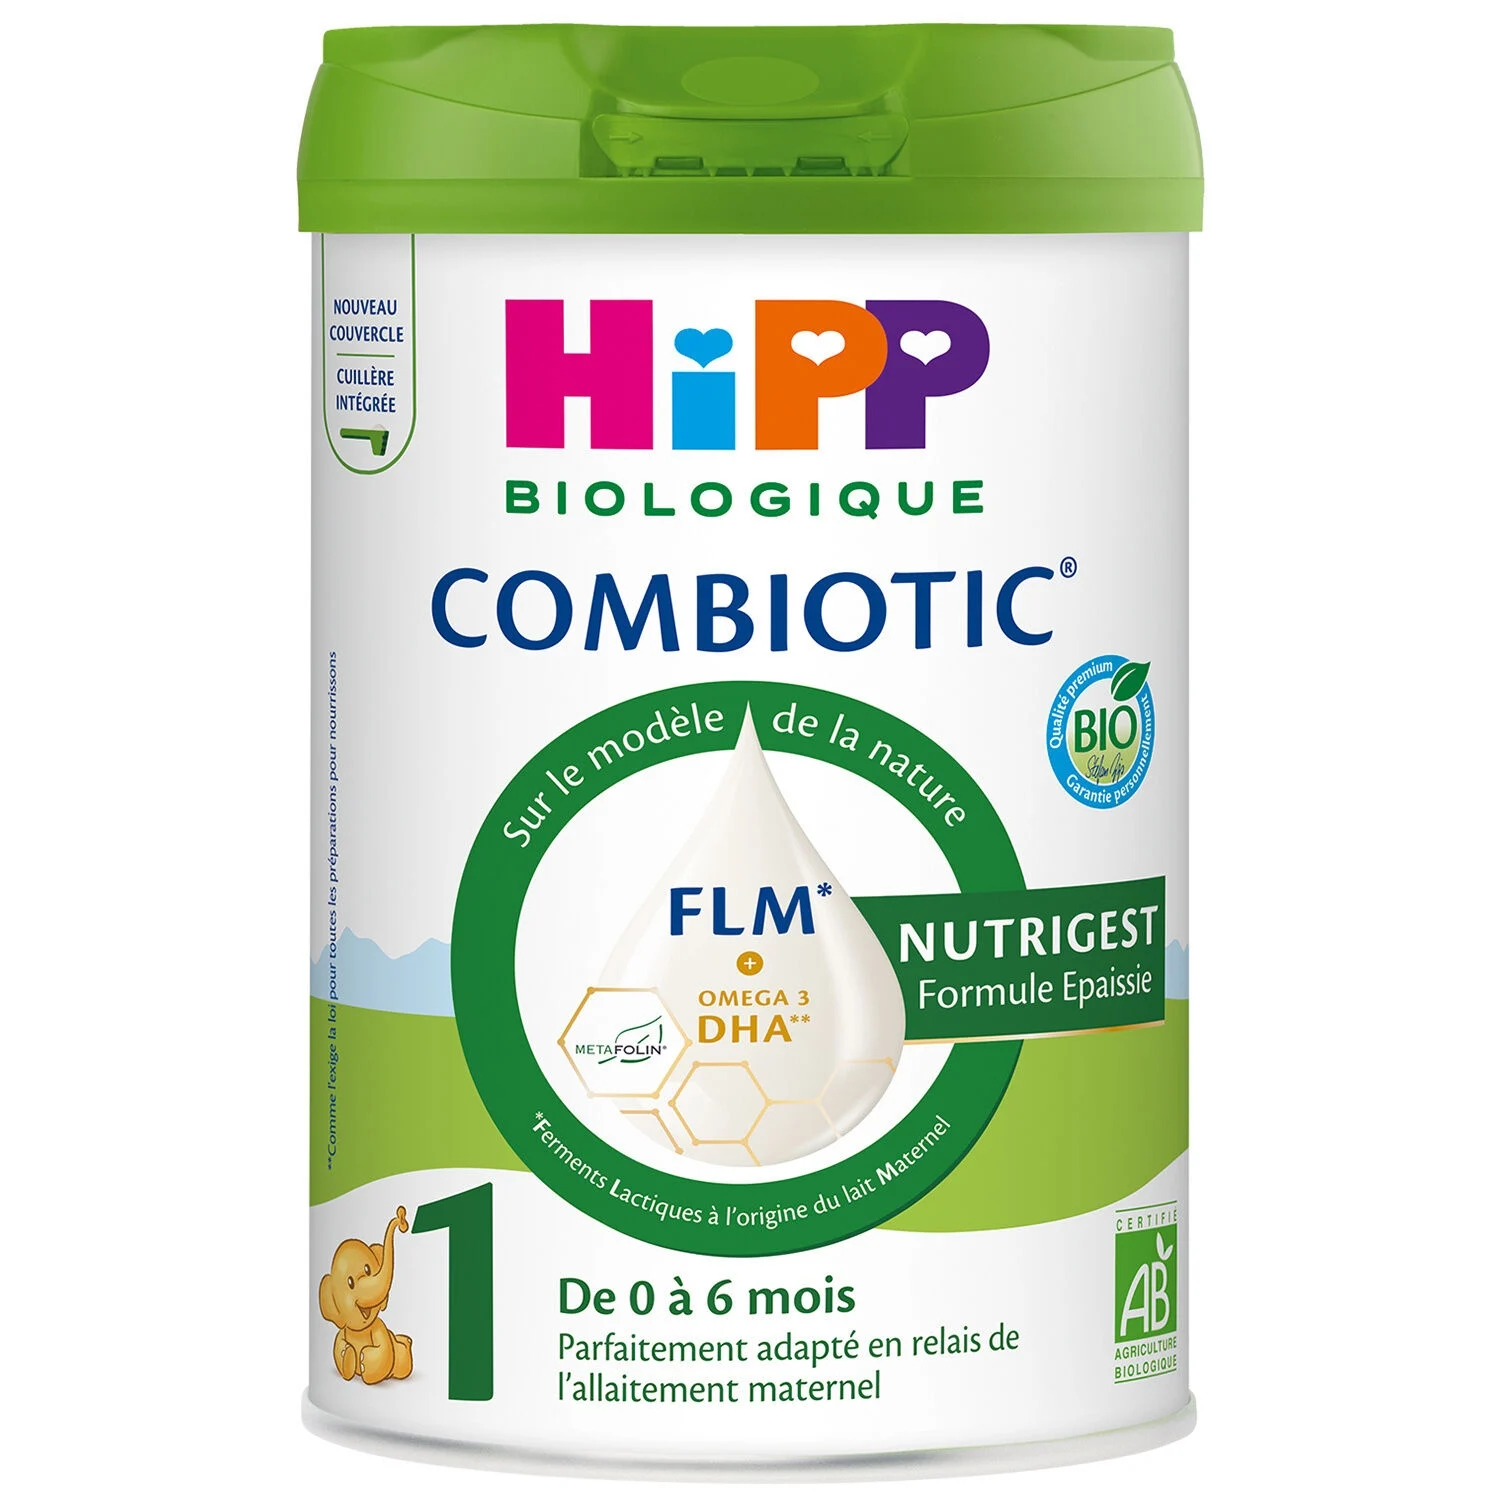 800g Combiotic 1 Nutrigest Hip